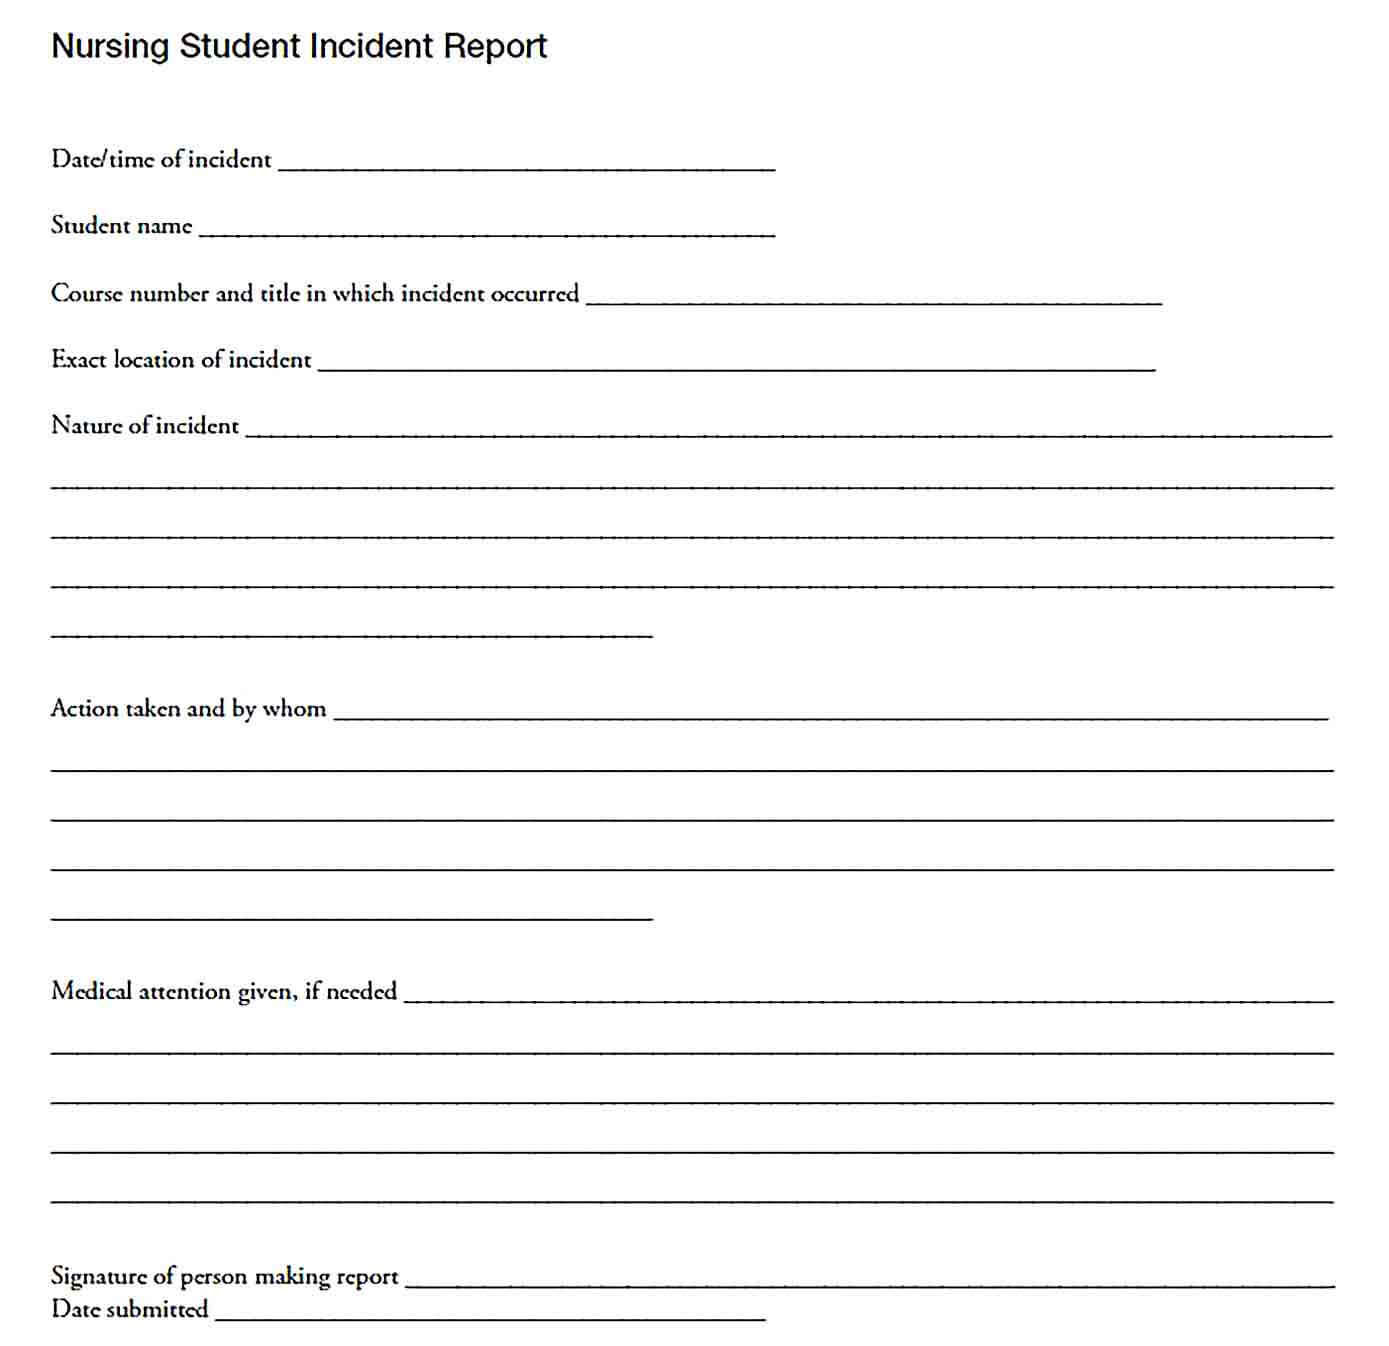 Sample Nursing Incident Report Template